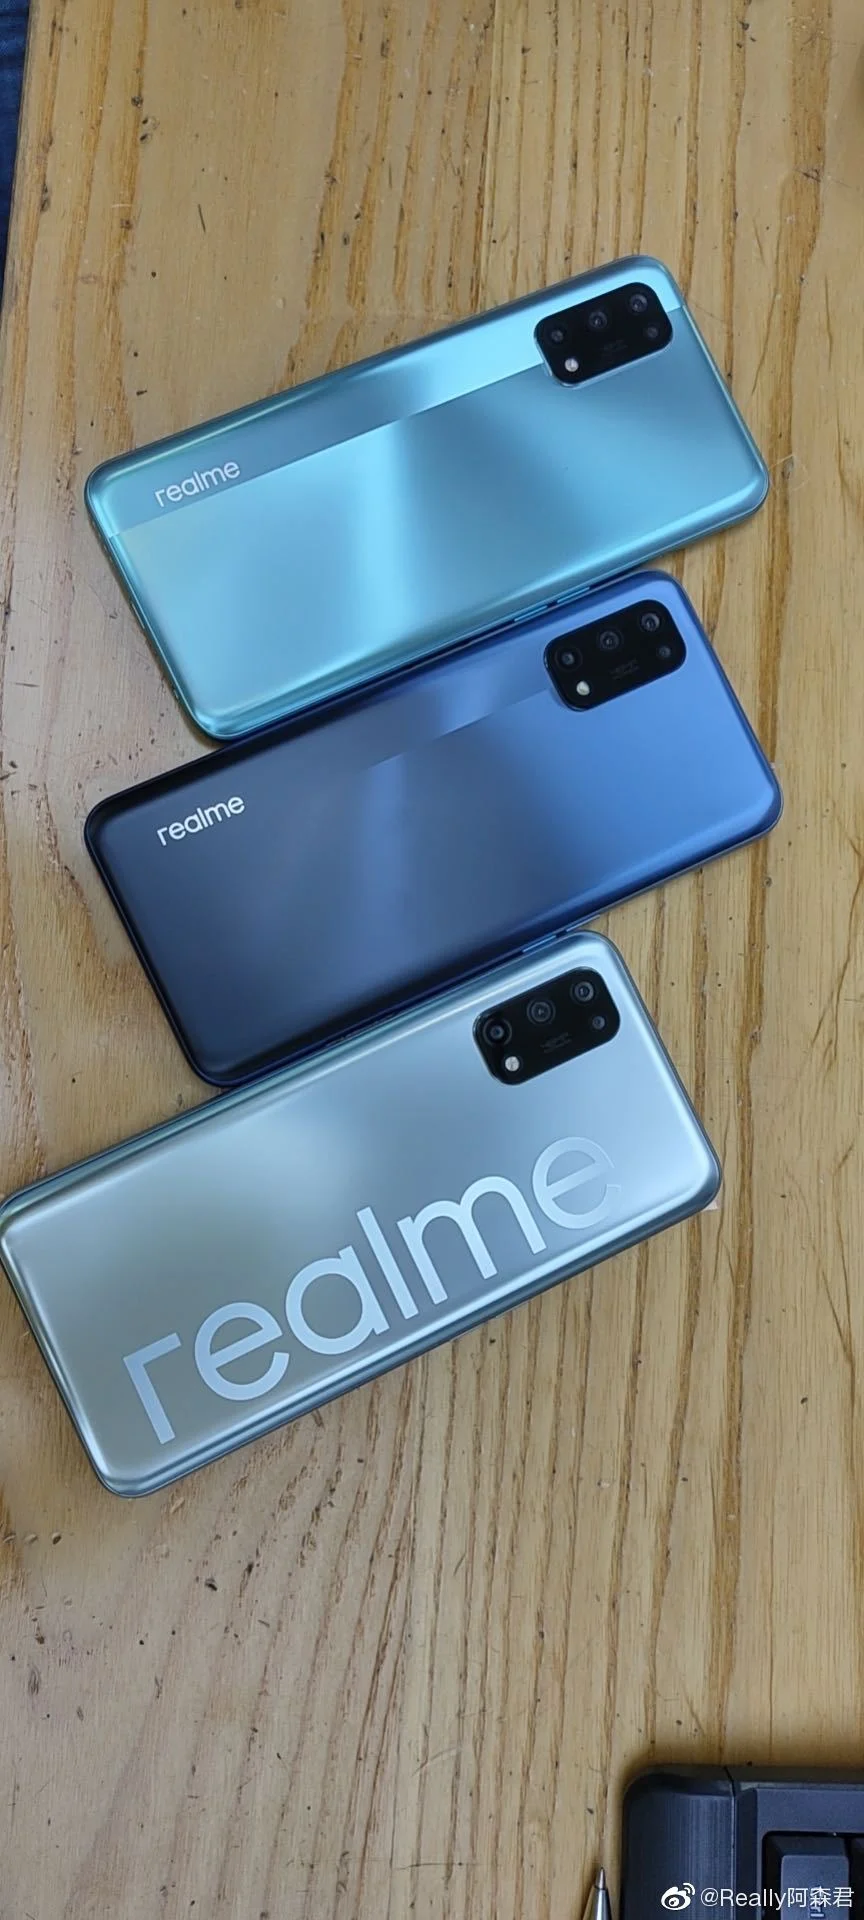 Живое фото Realme V5 рассекречивает некоторые характеристики смартфона (realme v5 live shot 2)